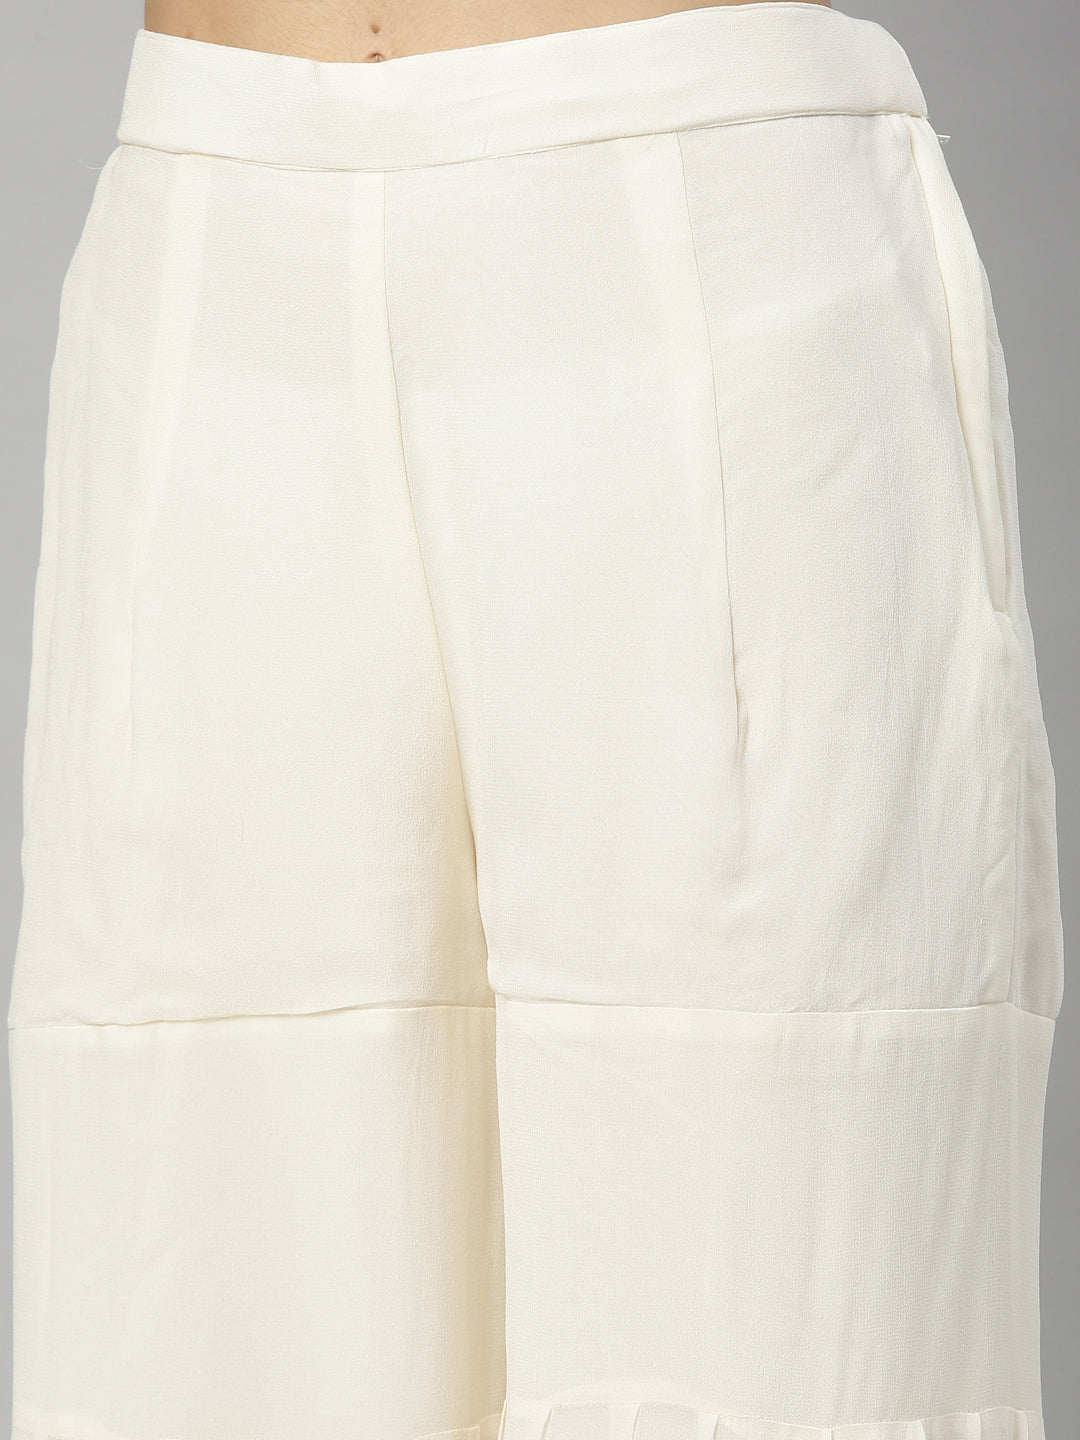 Neeru's Cream Color Georgette Fabric Suit-Gharara